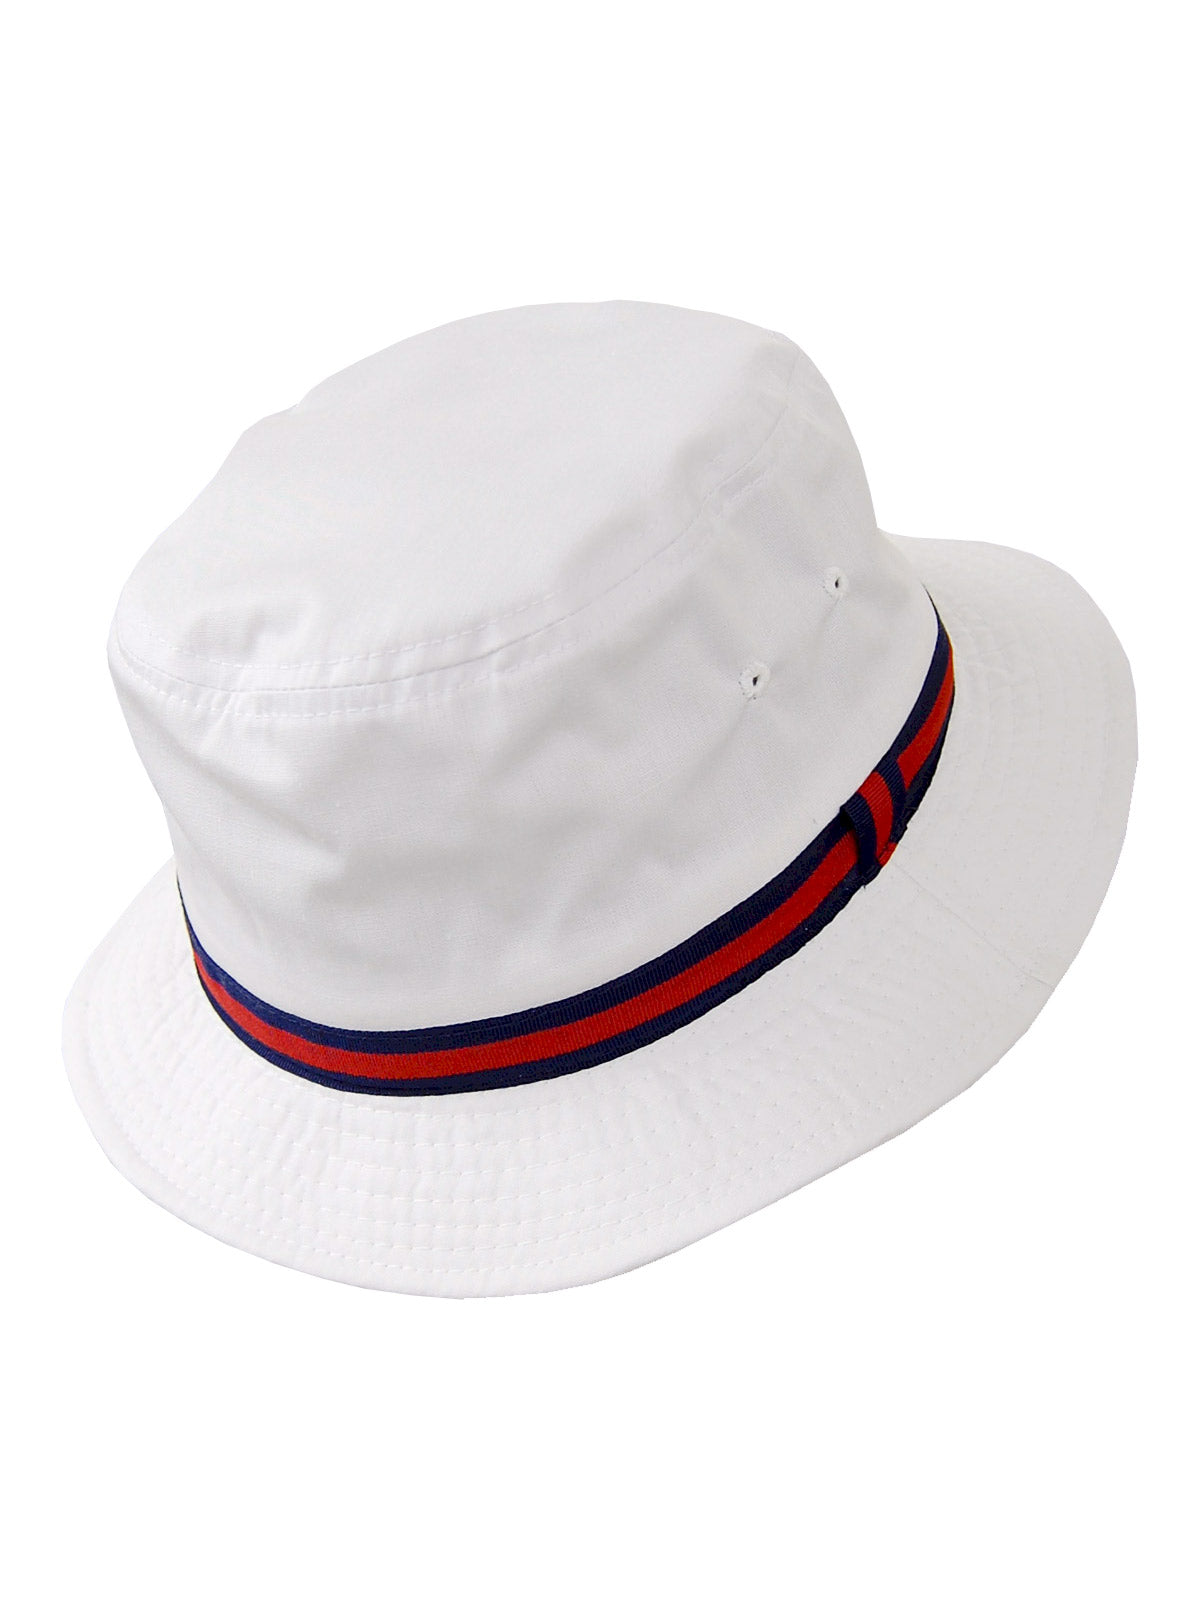 Dorfman Pacific Deluxe Bucket Rain Hats in White - 830D-WHT